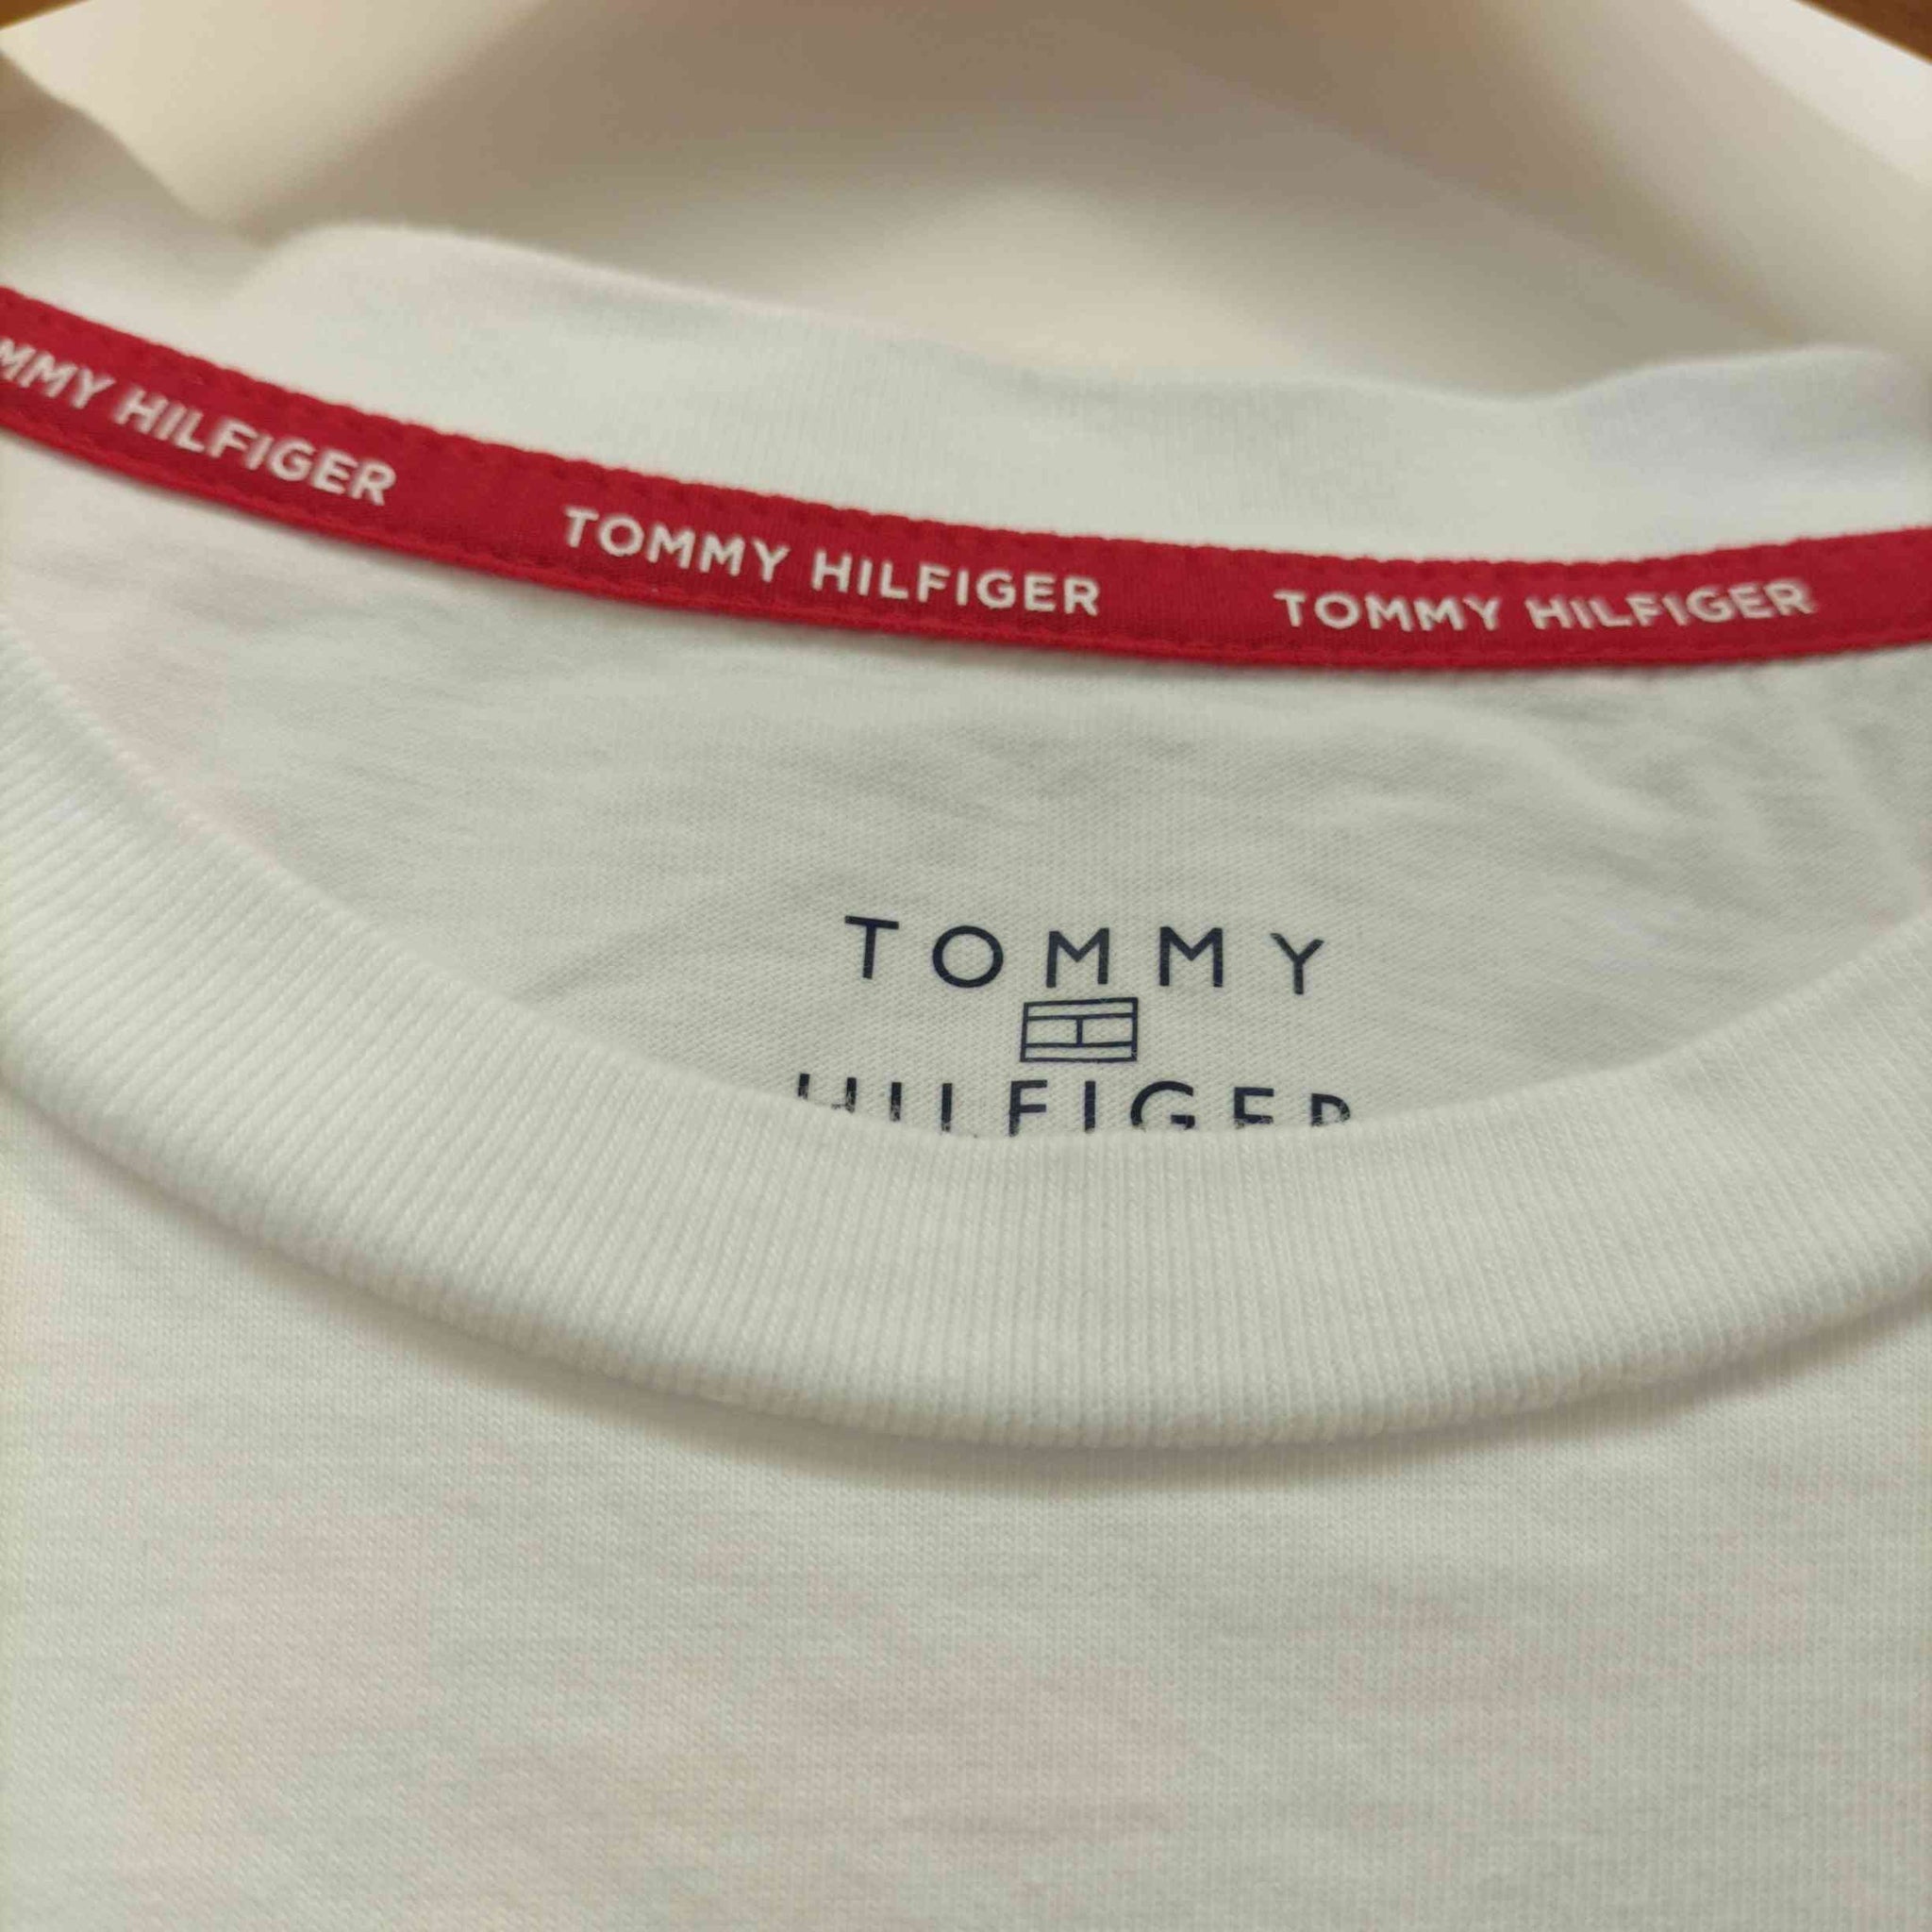 TOMMY HILFIGER(トミーヒルフィガー)Core T-Shirt クルーネックTシャツ